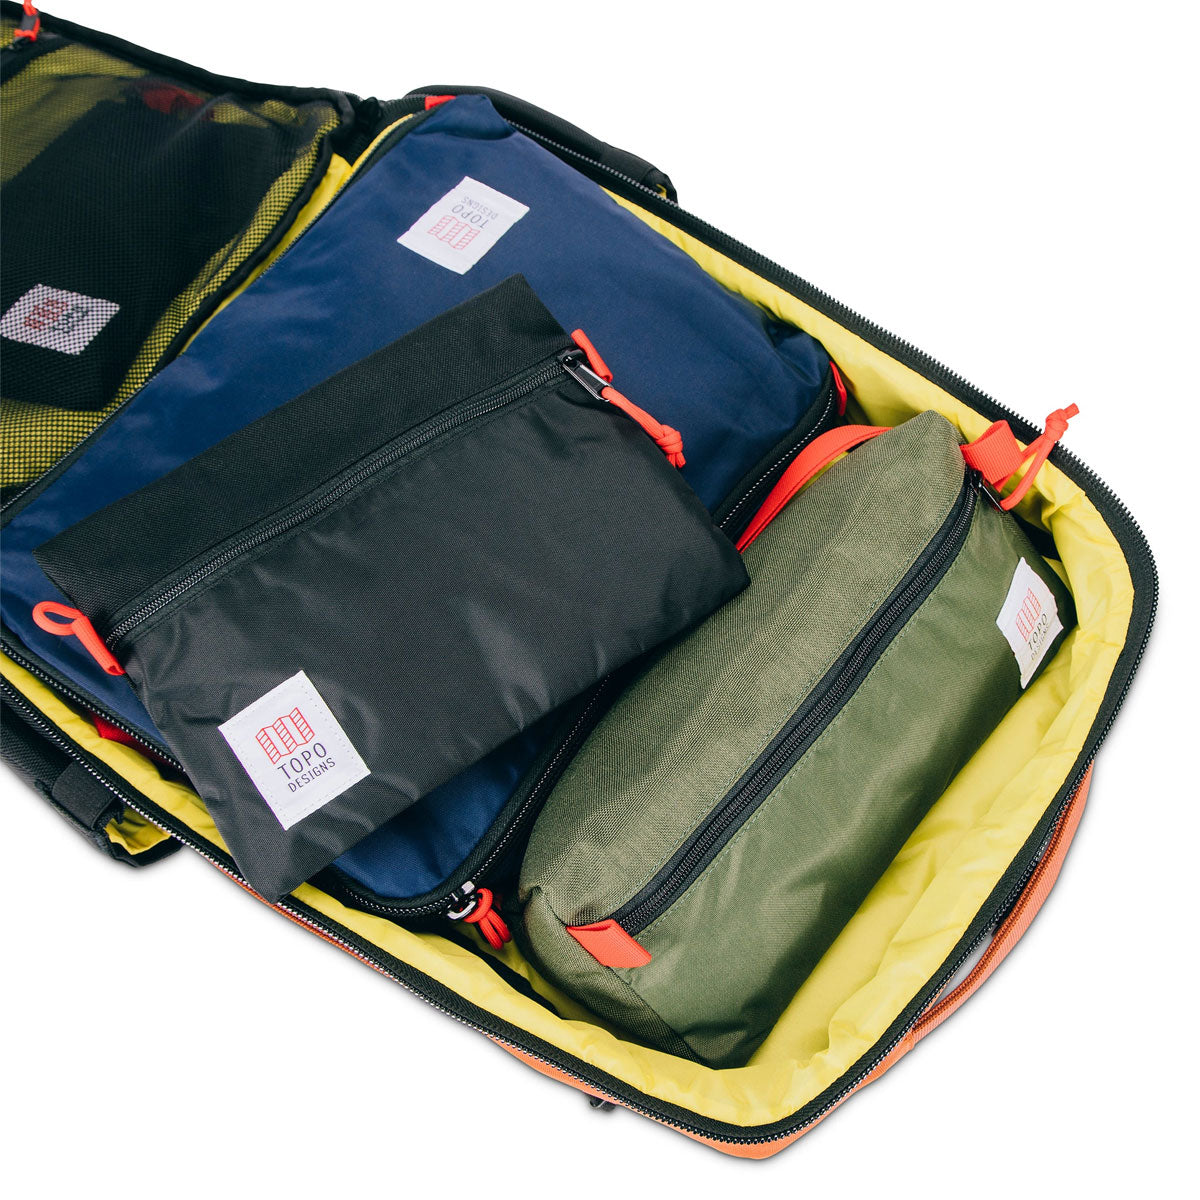 Topo Designs : Global Travel Bag 30L : Dark Denim/Burgundy